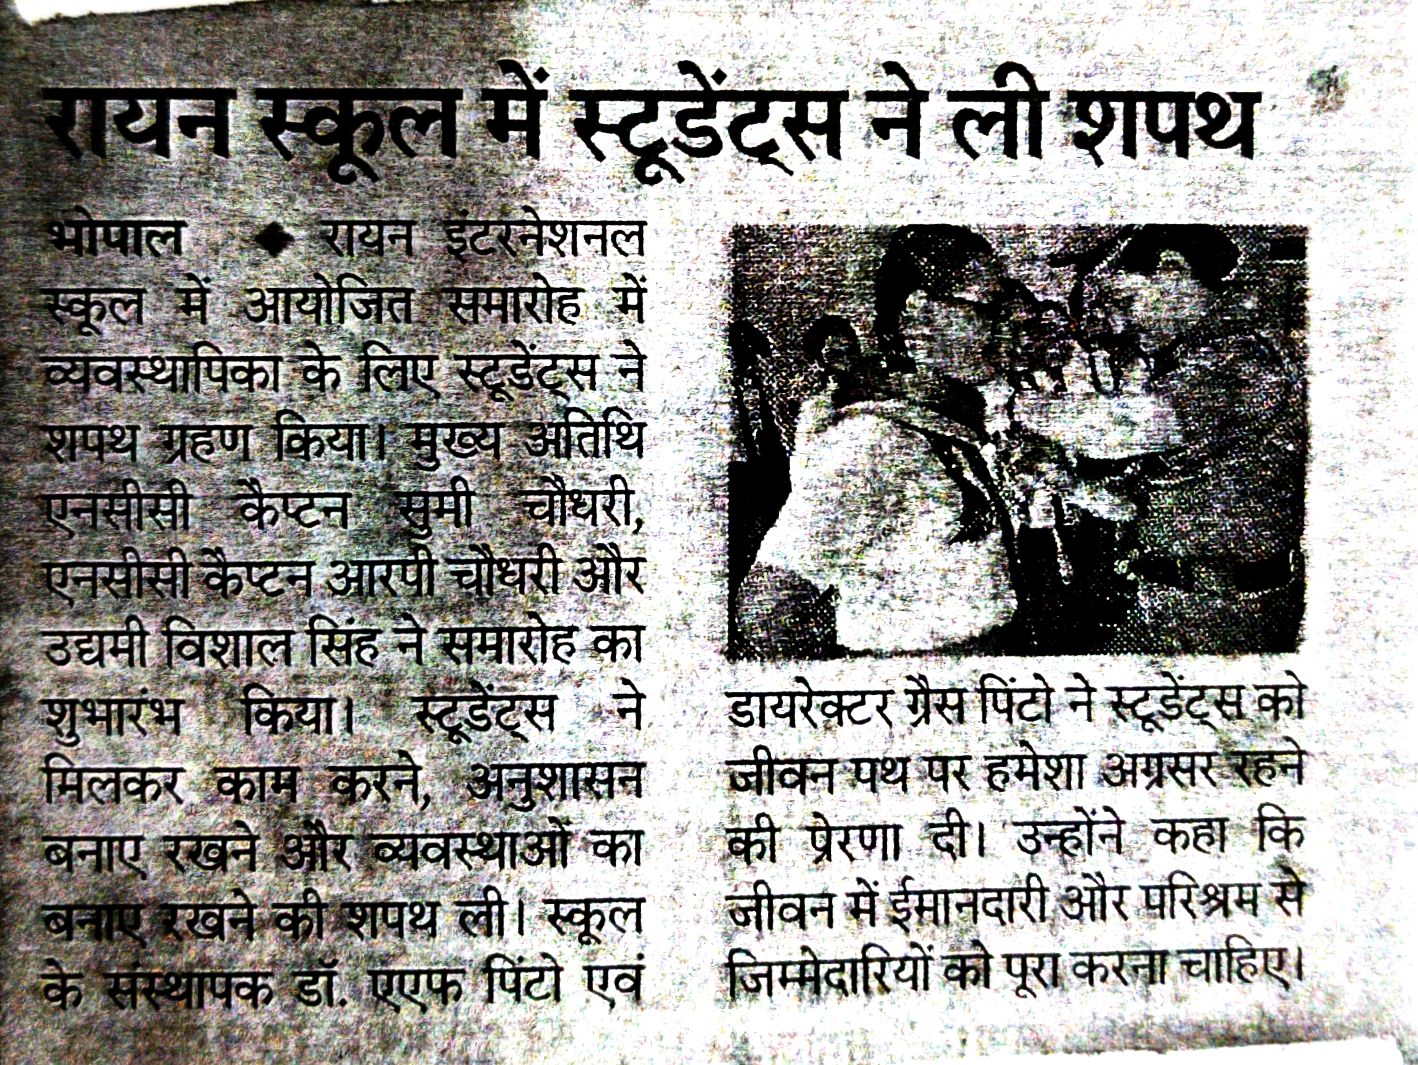 Grand Investiture Ceremony at Ryan International School Bhopal’ - Patrika Plus - Ryan International School, Bhopal